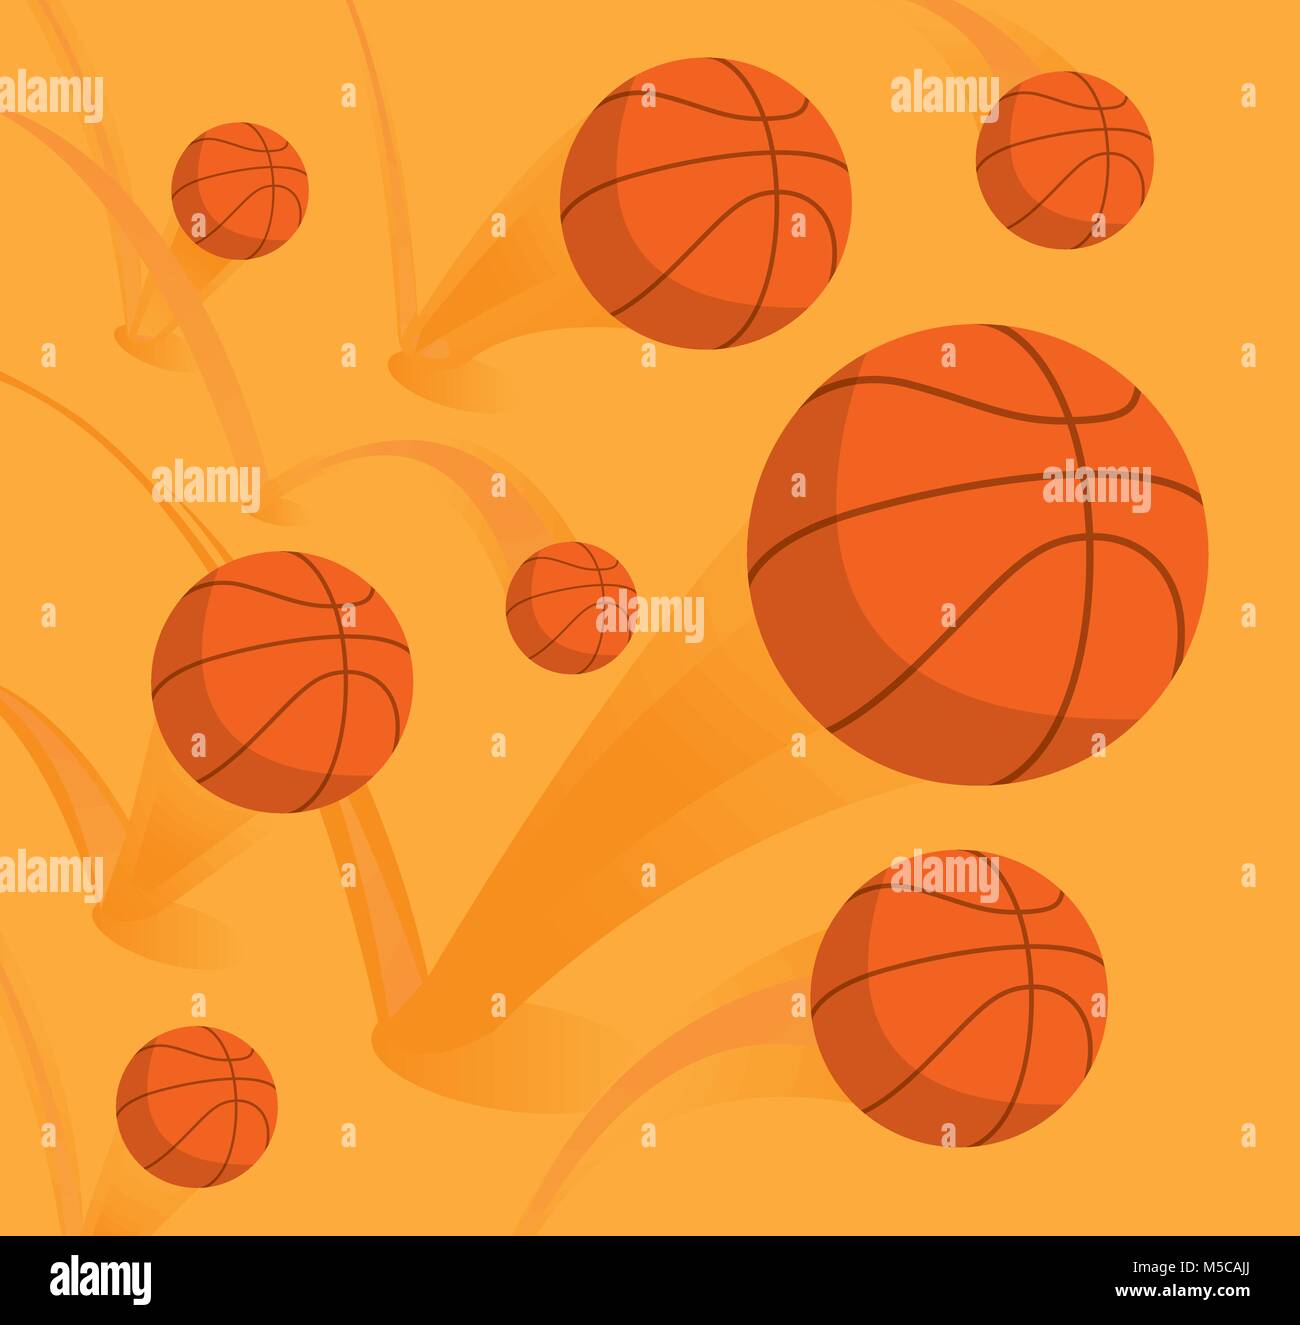 Cartoon illustration of many basket balls bouncing Stock Vector